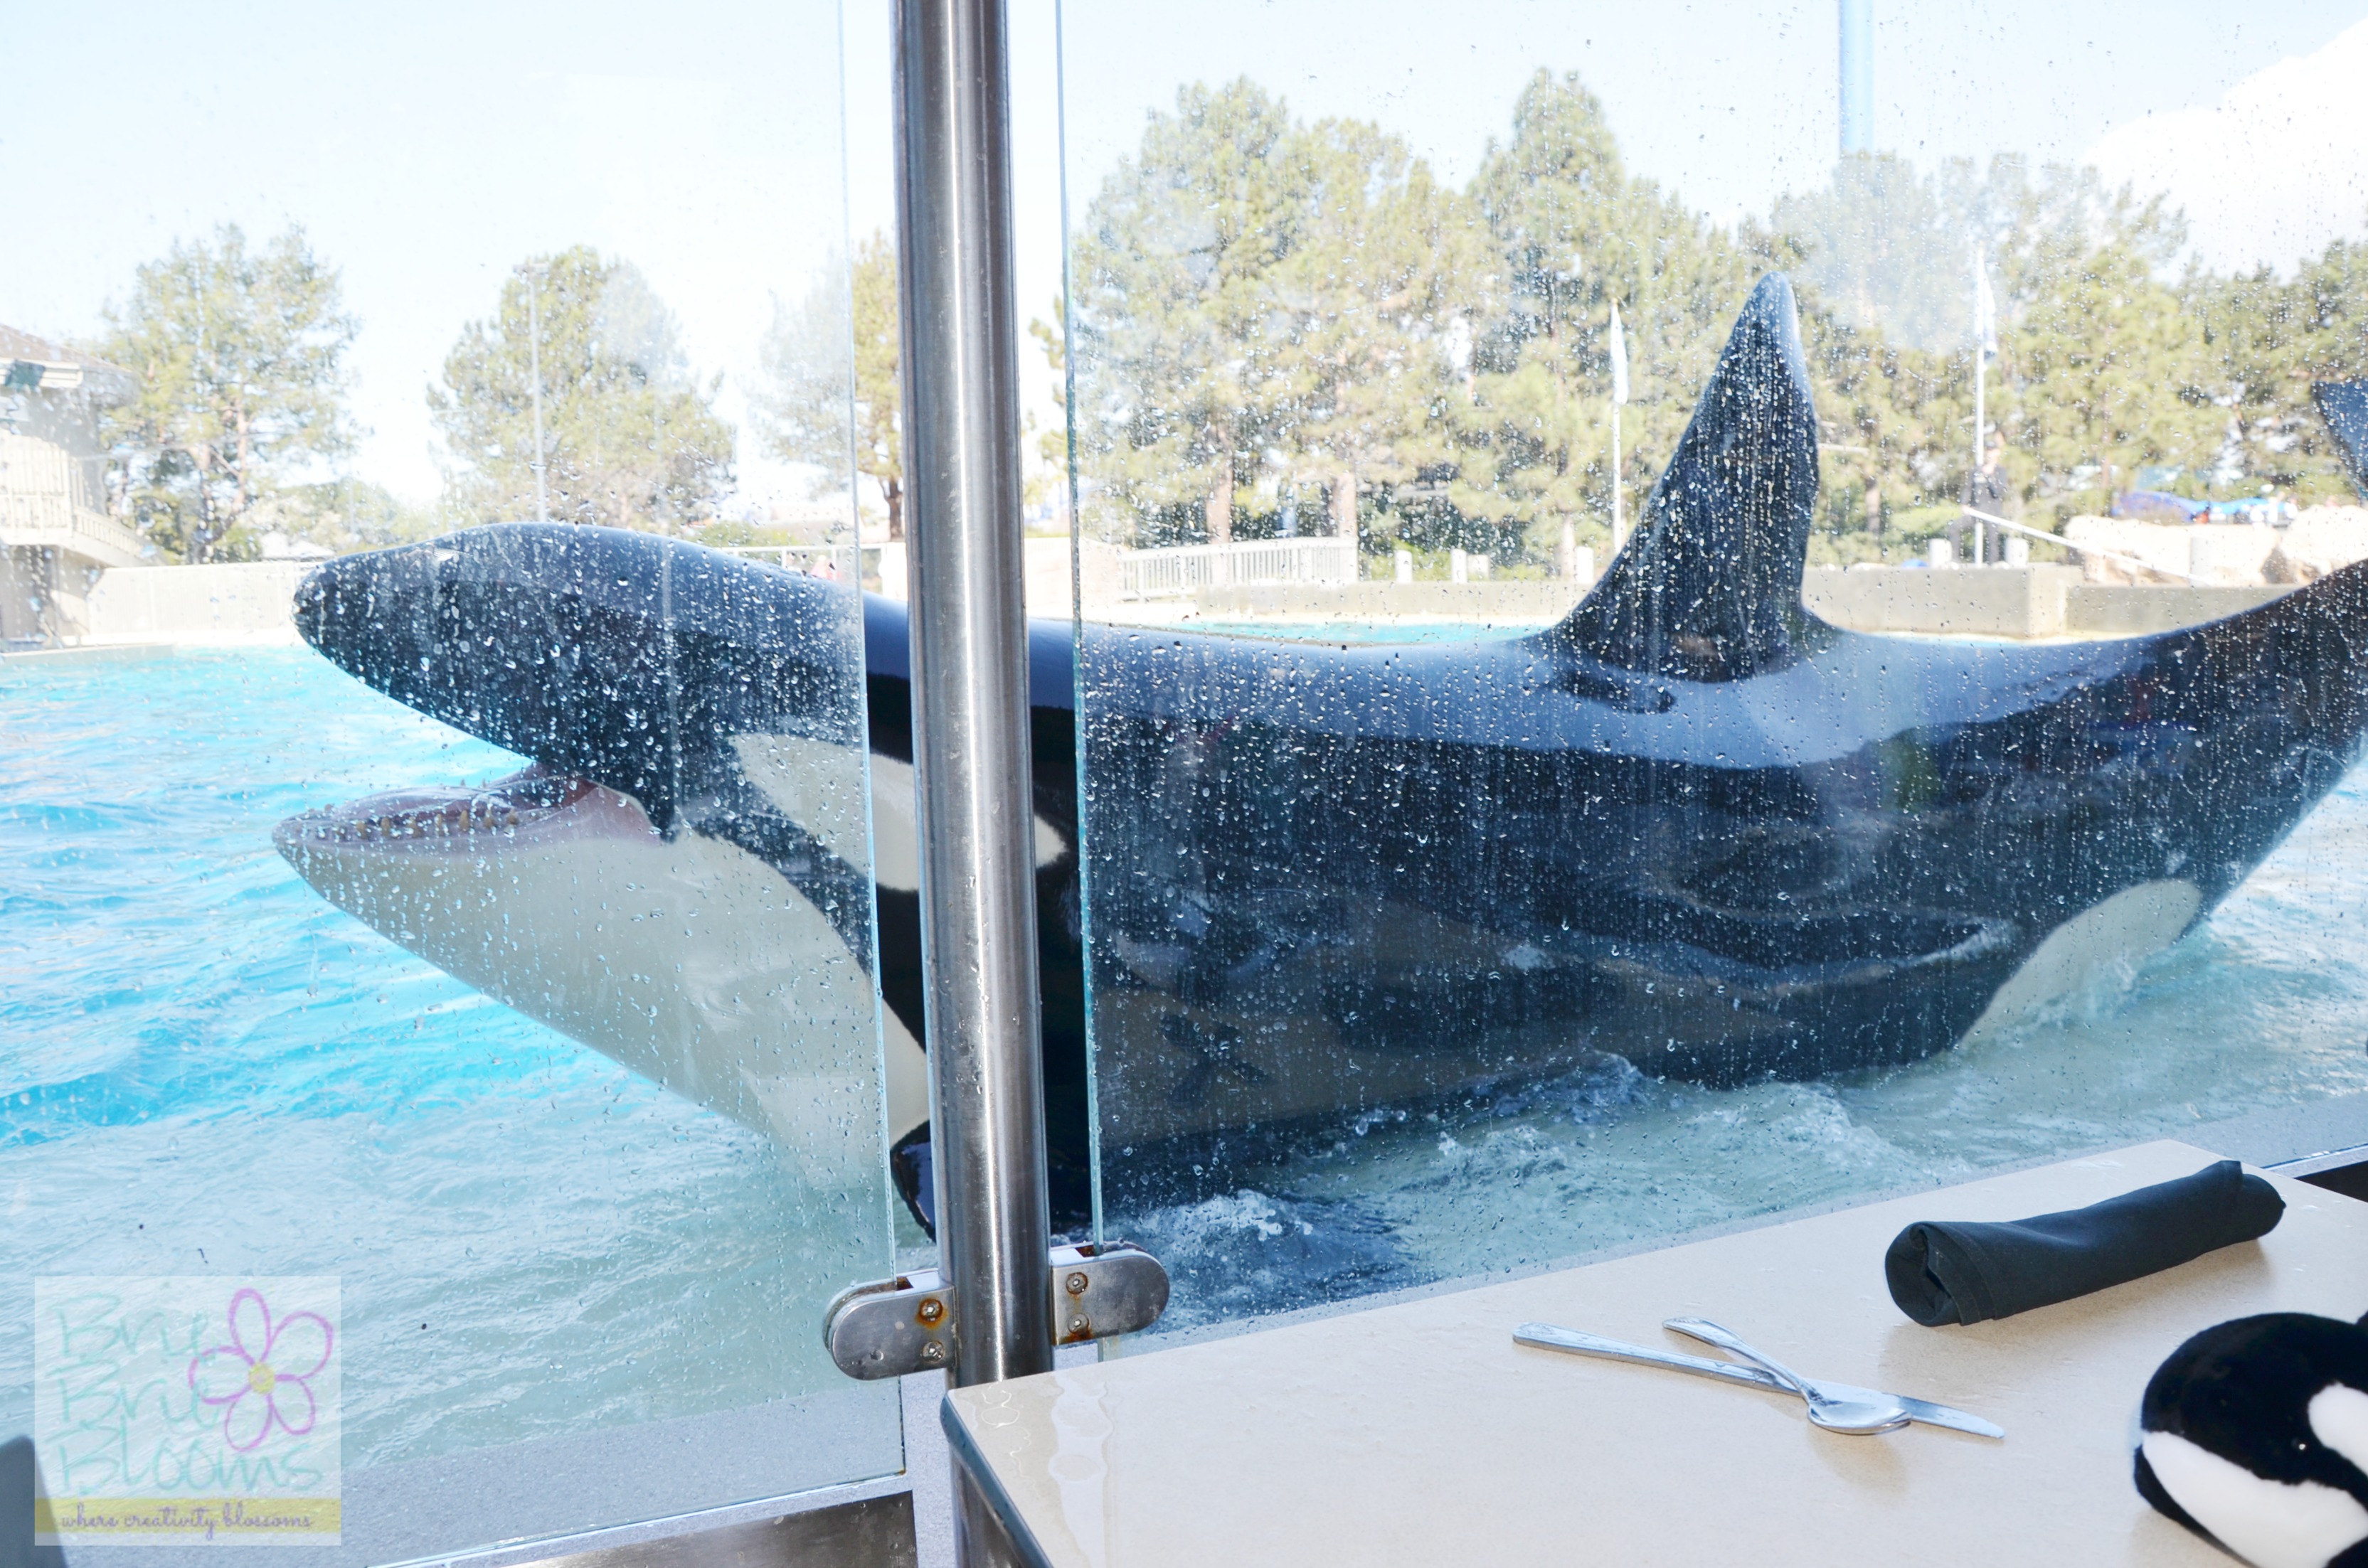 Killer-whales-at-Dine-with-Shamu-SeaWorld-San-Diego